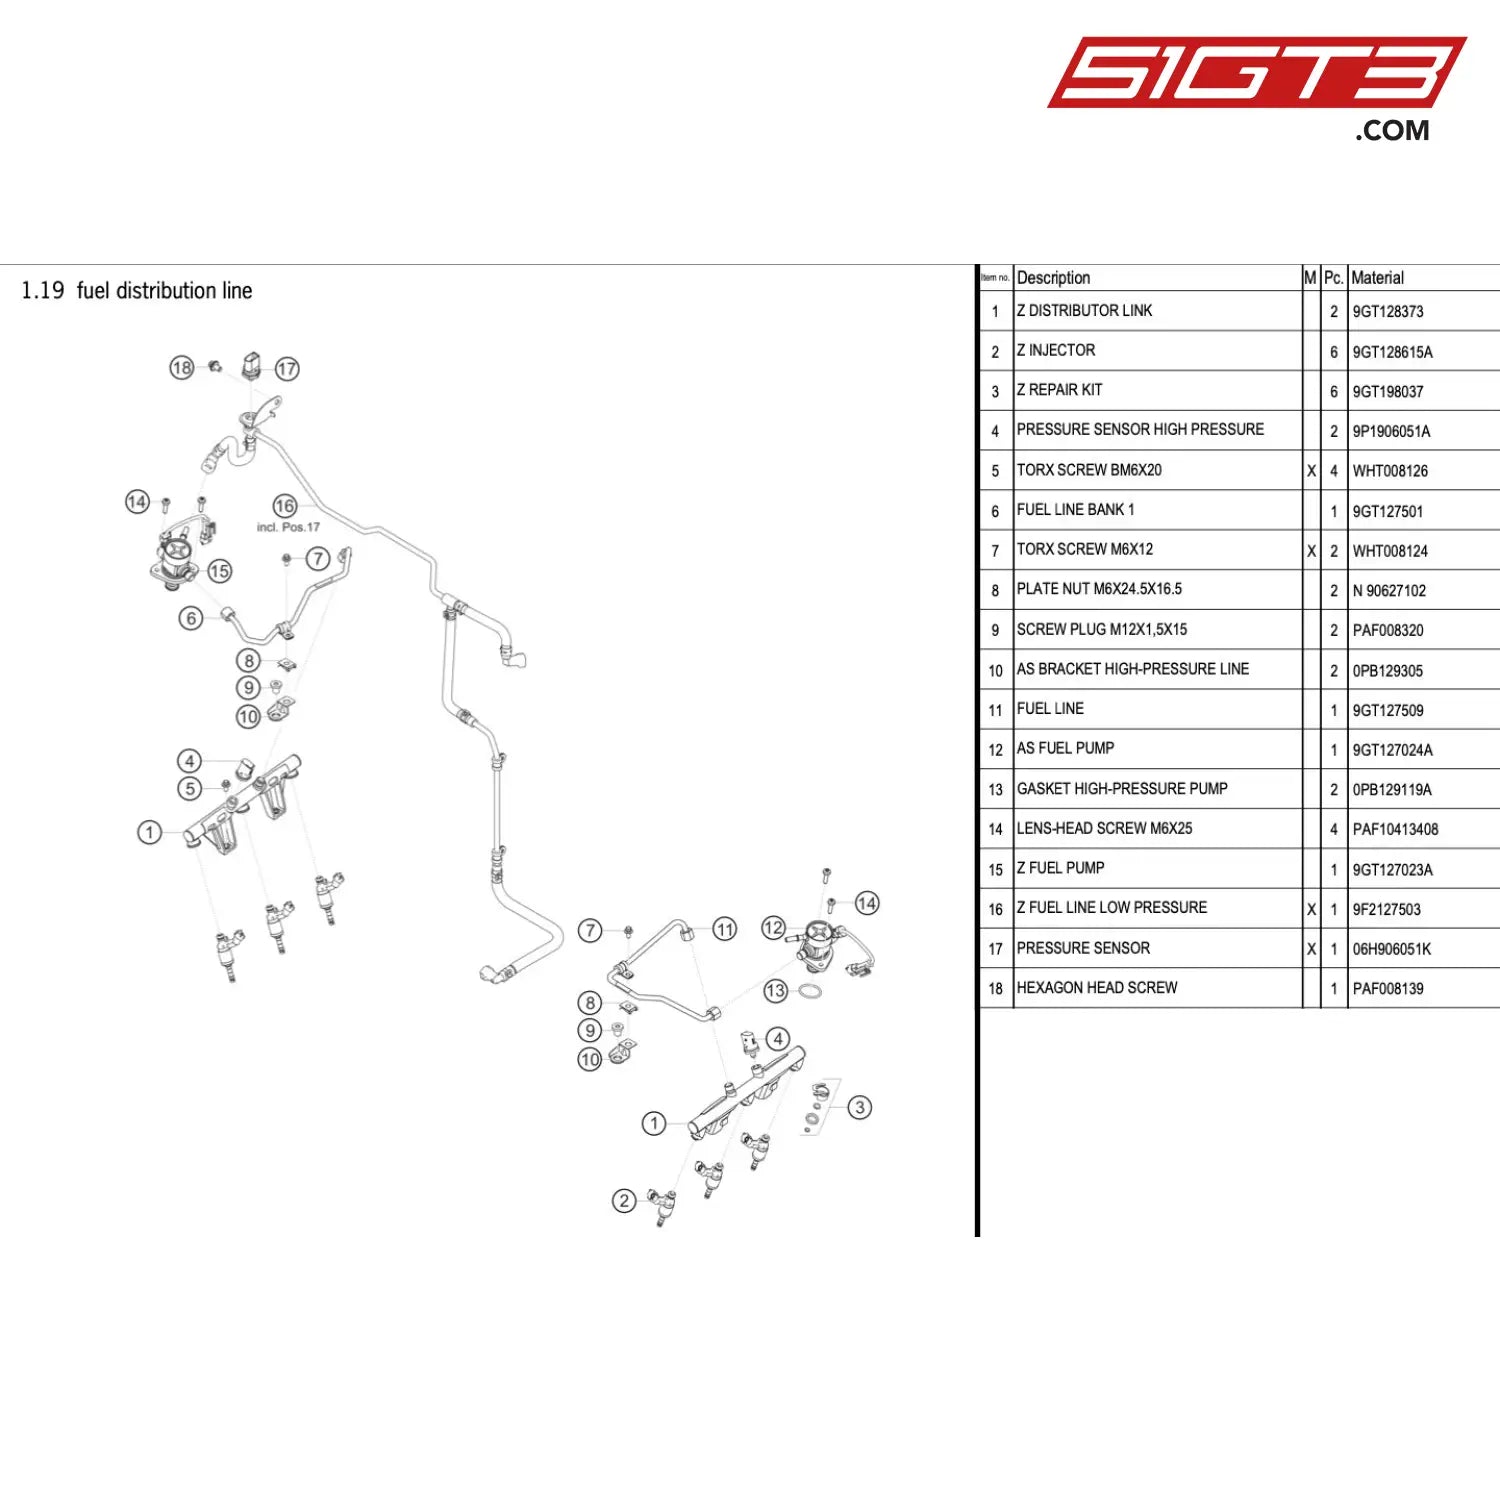 Plate Nut M6X24.5X16.5 - N 90627102 [Porsche 718 Cayman Gt4 Rs Clubsport] Fuel Distribution Line